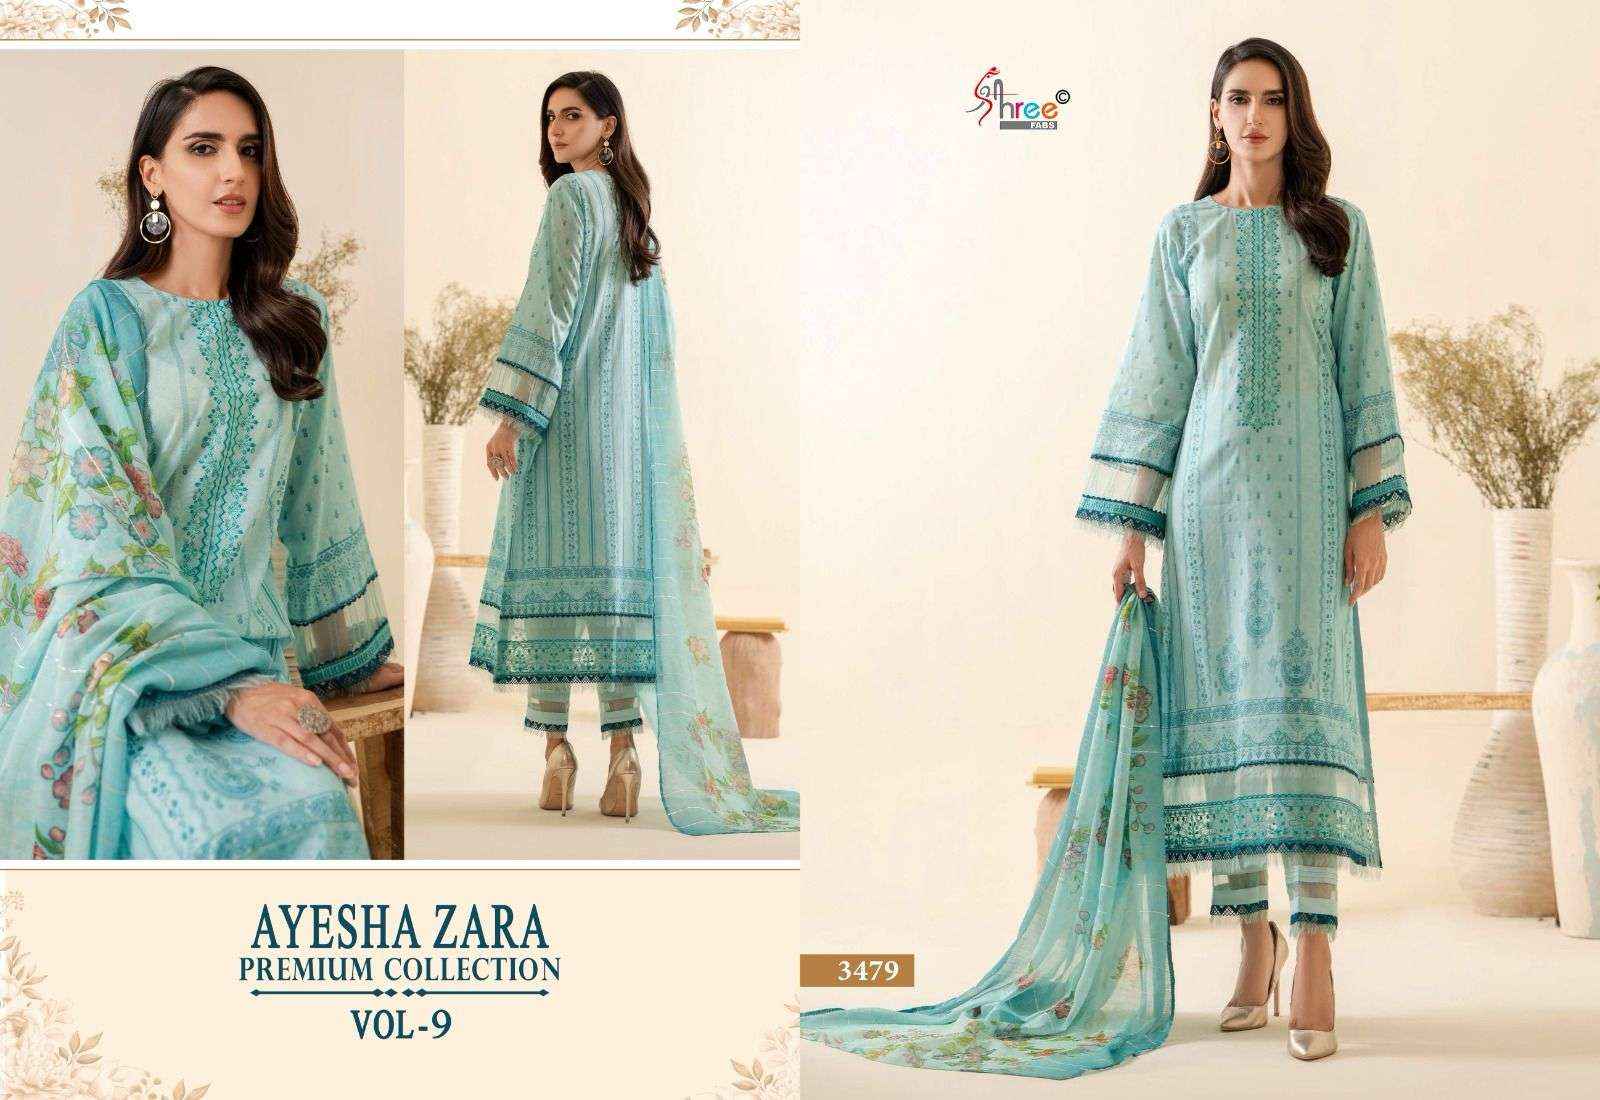 Shree Fabs Ayesha Zara Premium Collection Vol 9 Cotton Dress Material 6 pcs Catalogue